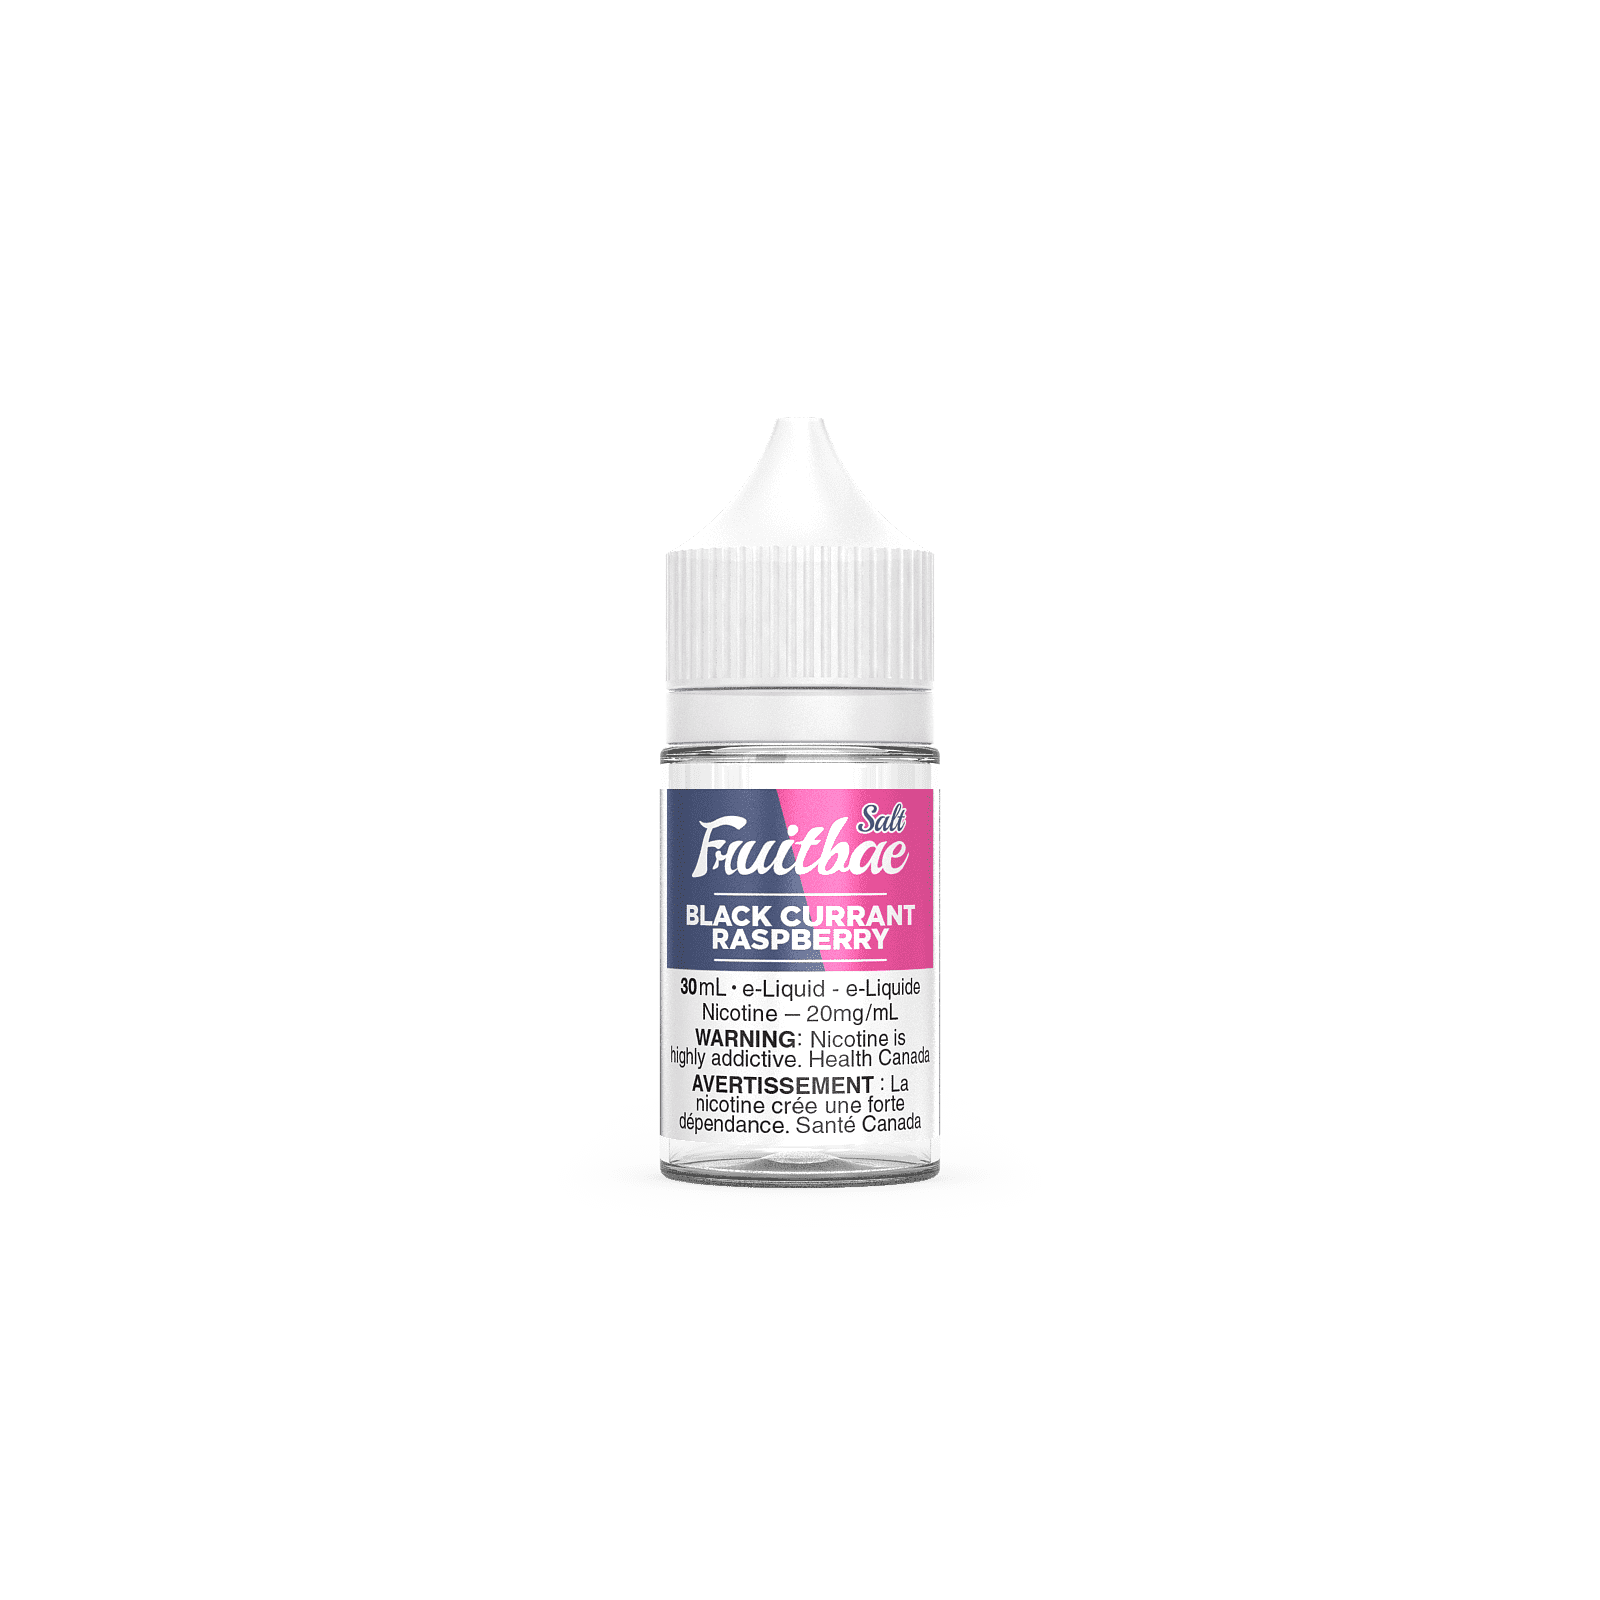 BLACK CURRANT RASPBERRY BY FRUITBAE SALT (30mL) - Smoke FX